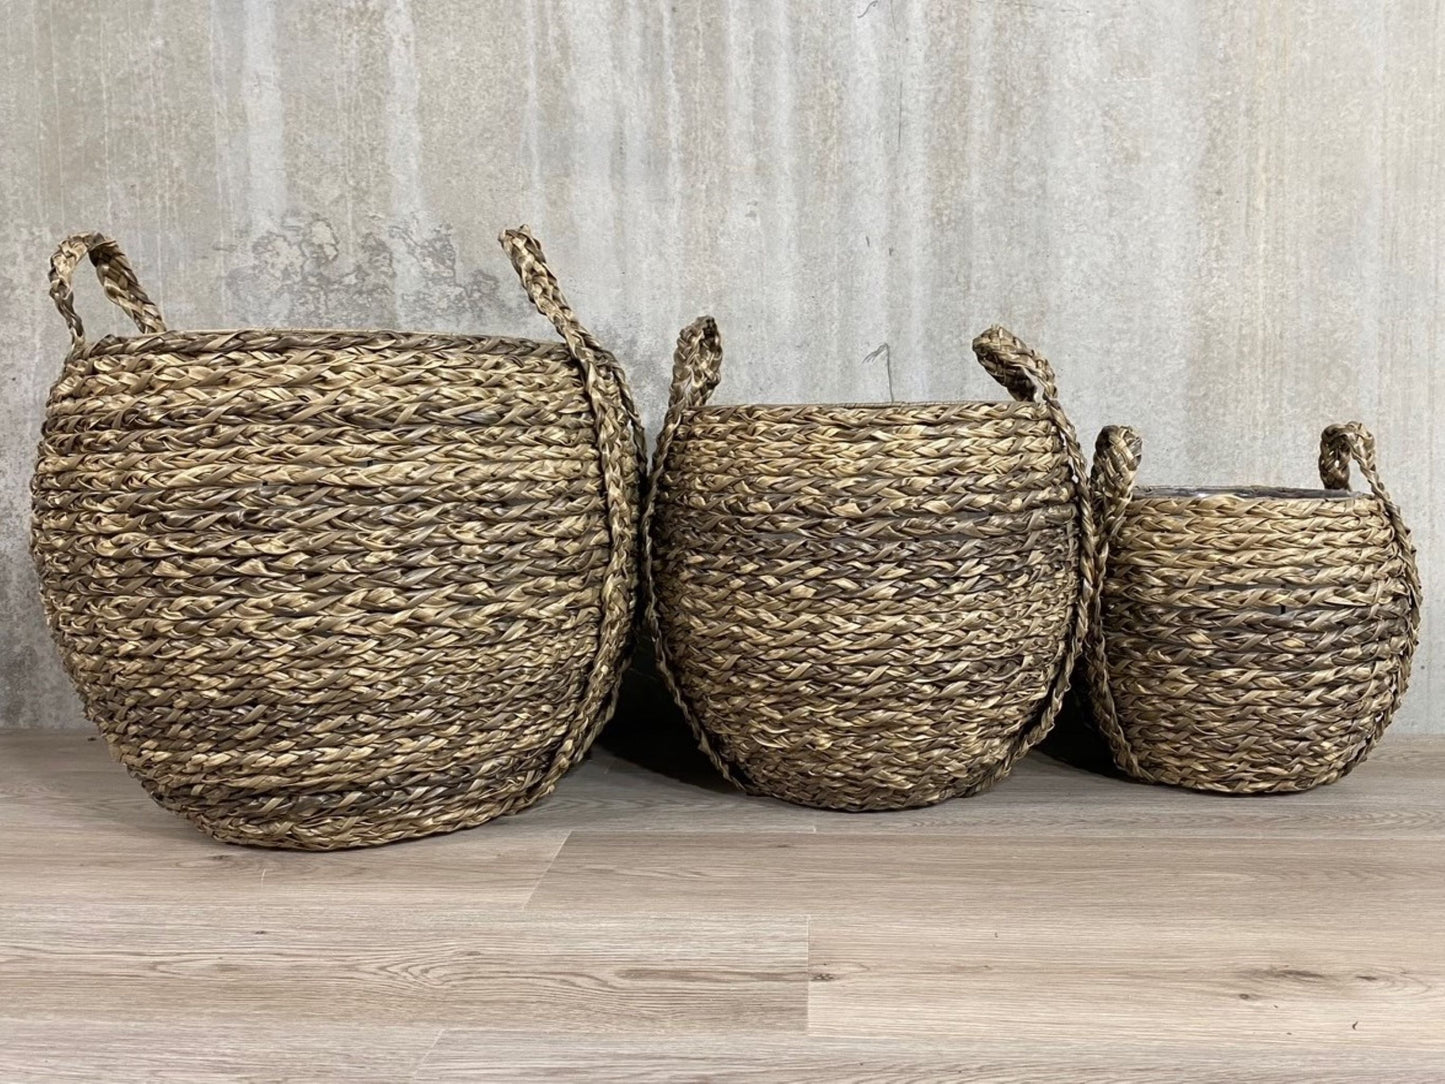 MENDES 3 Piece Set Poly Rattan Wicker Large Planter Basket - Natural Brown - Direct Factory Furniture Australia